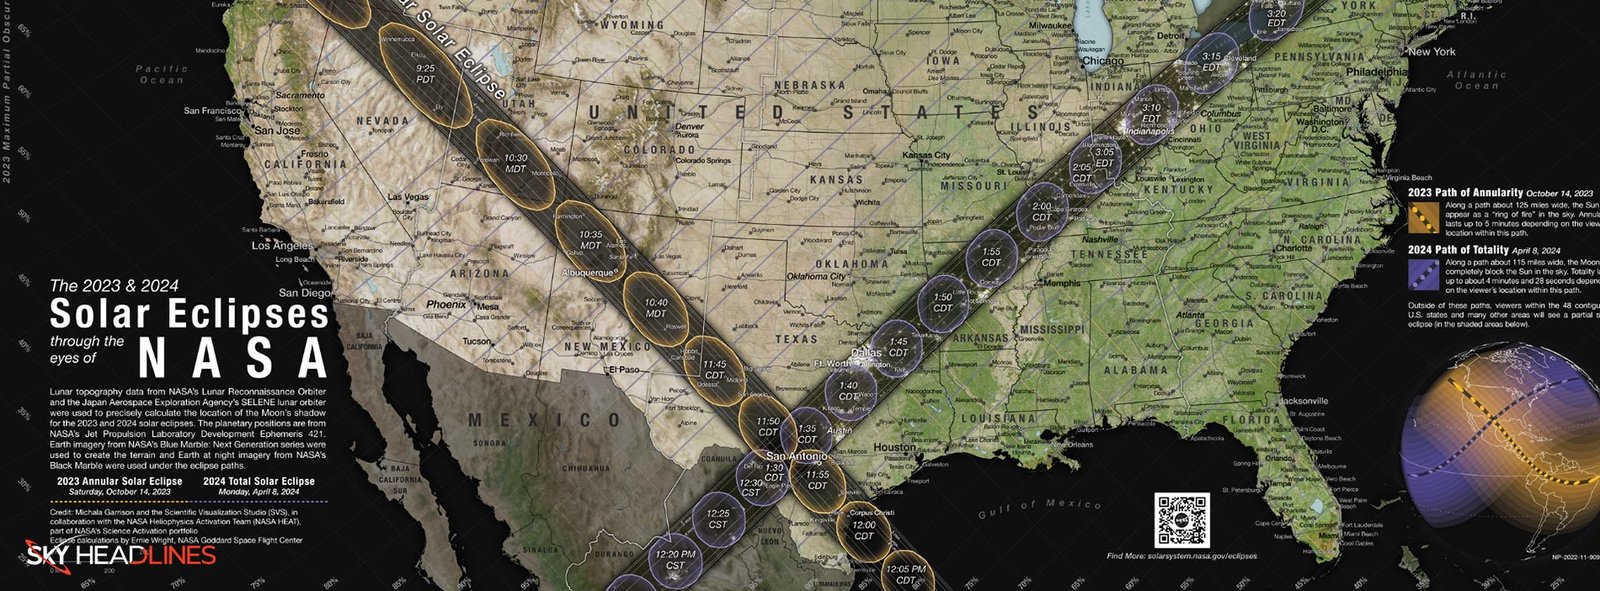 Solar Eclipse 2024 Interactive Map NASA's Latest Release Sky Headlines